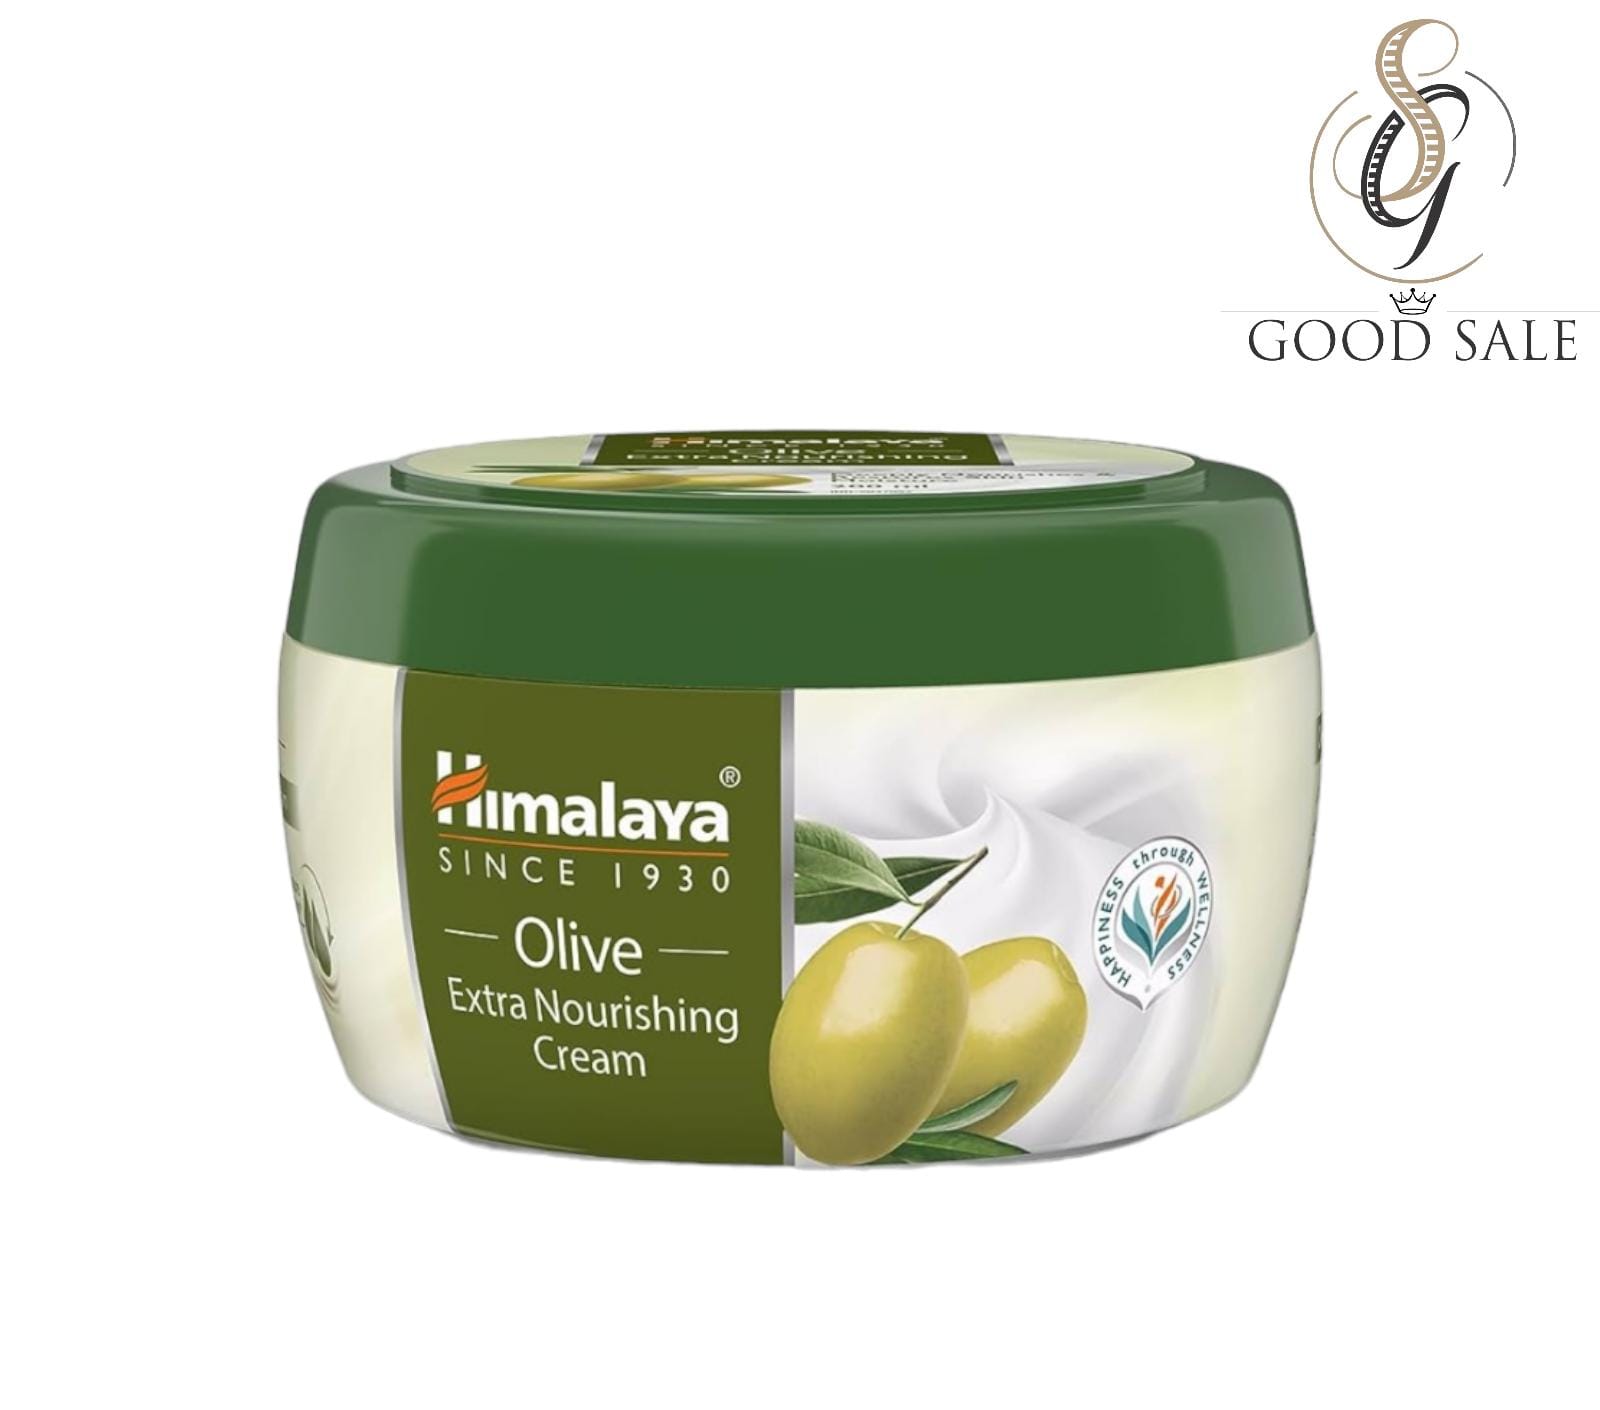 Himalaya olive Cream